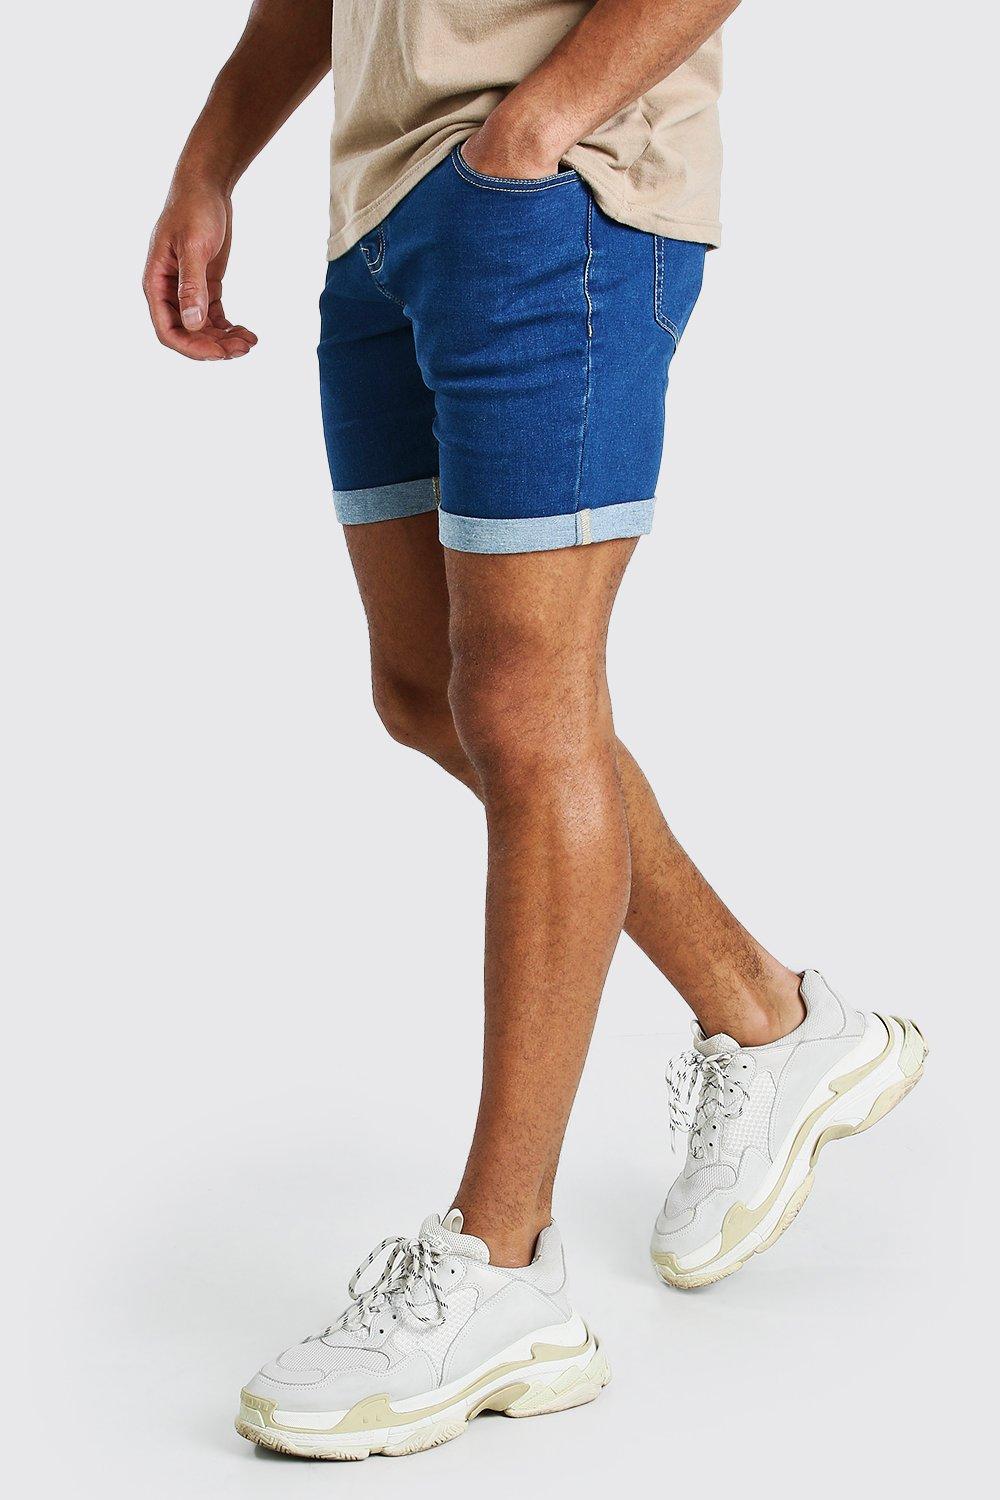 mens tight denim shorts